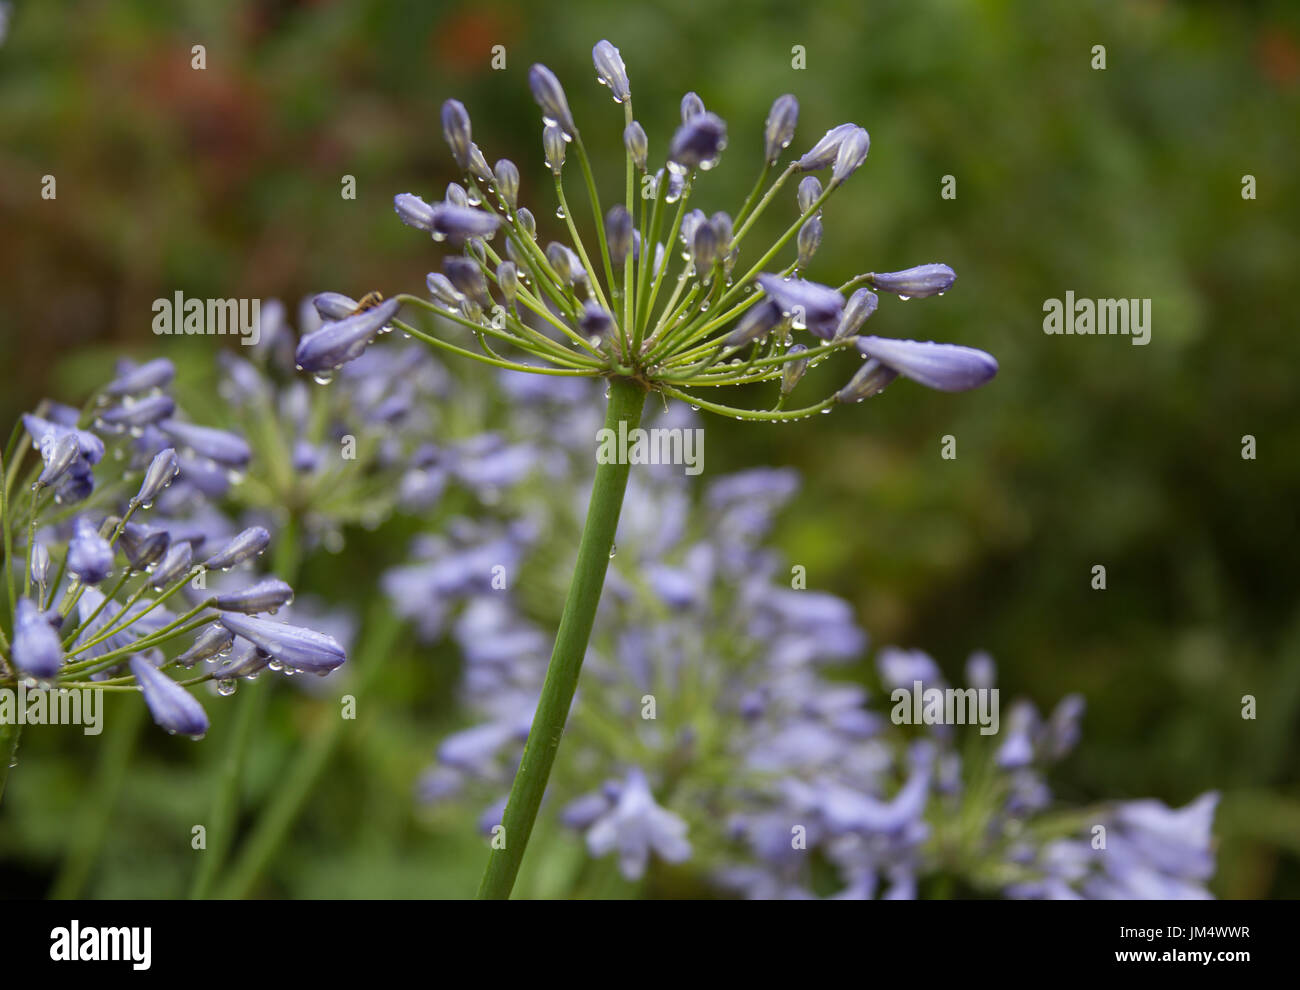 Agapanthus Pflanze im Sommerregen Stockfotografie - Alamy